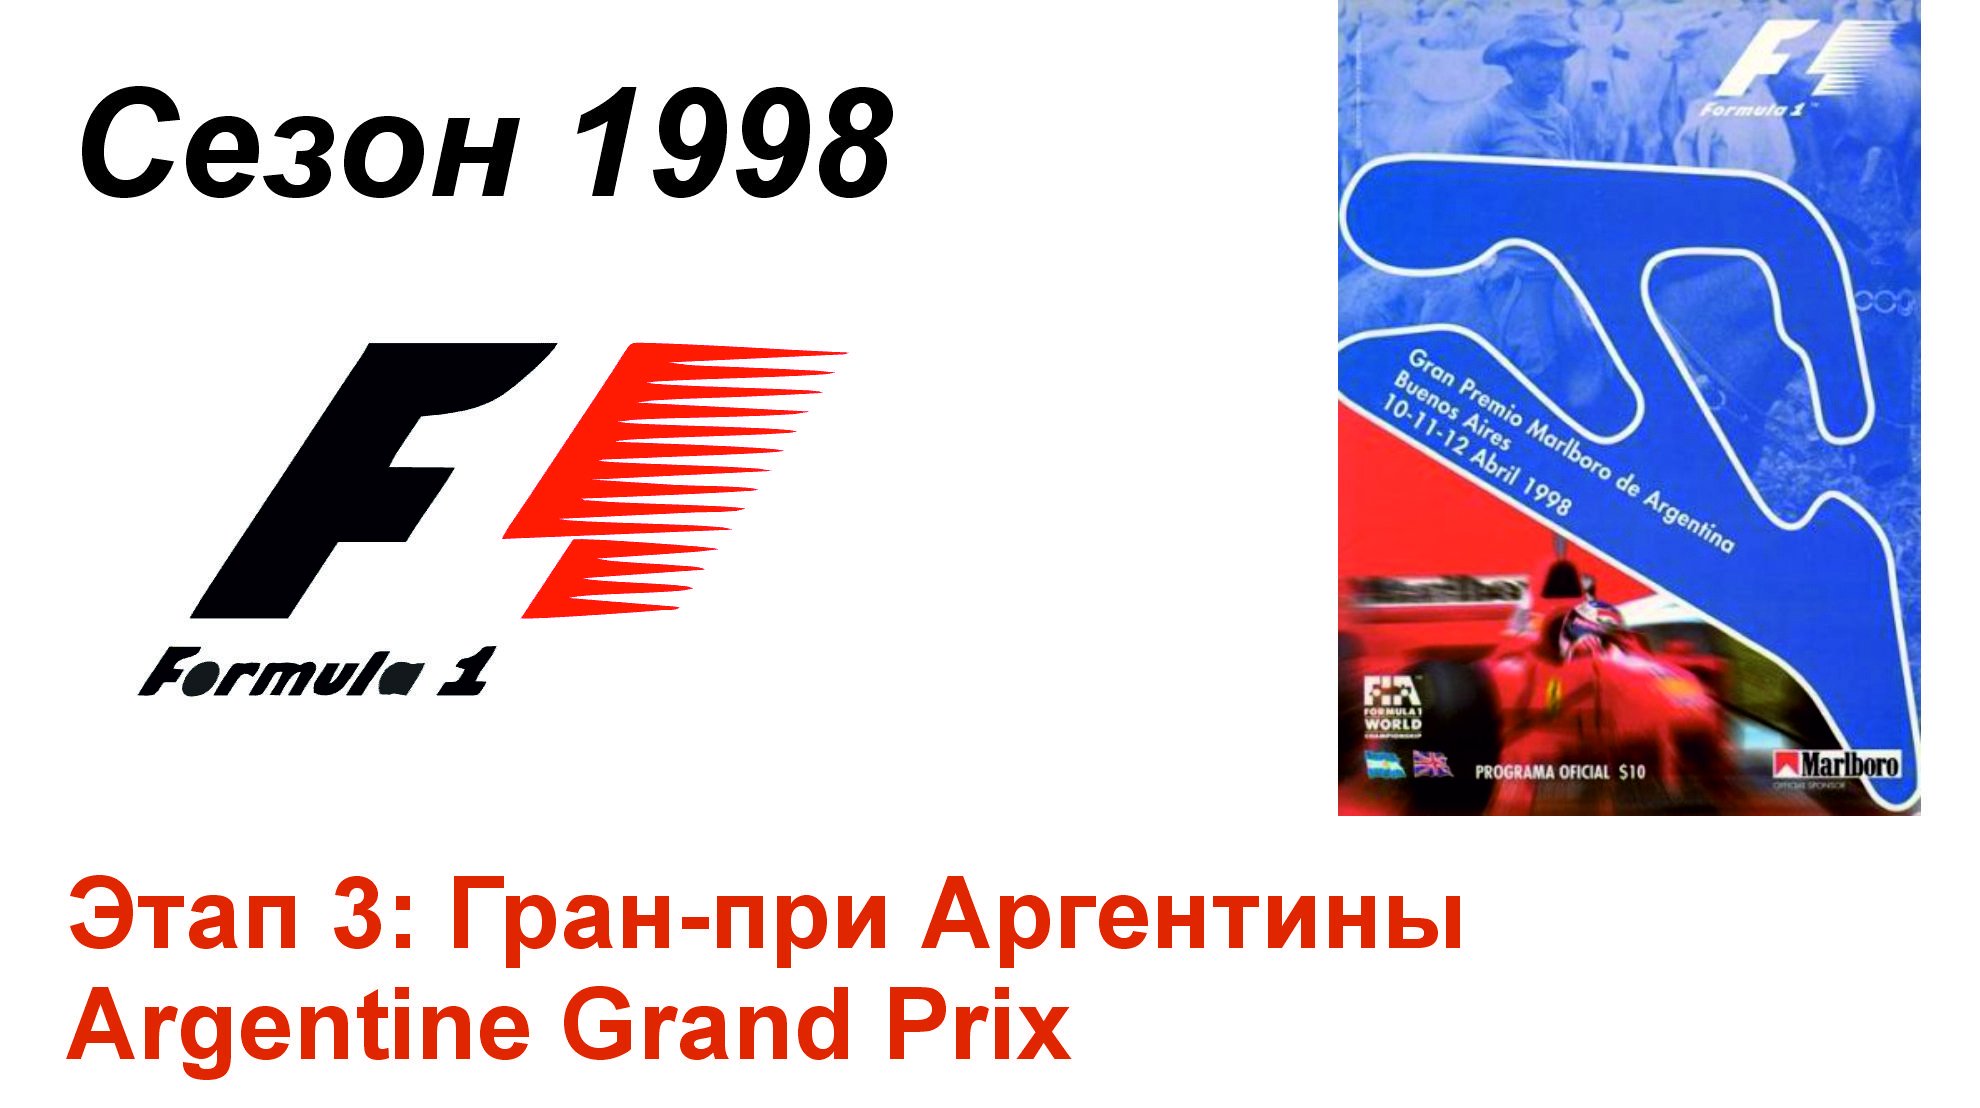 Формула-1 / Formula-1 (1998). Этап 3: Гран-при Аргентины (Рус/Rus)